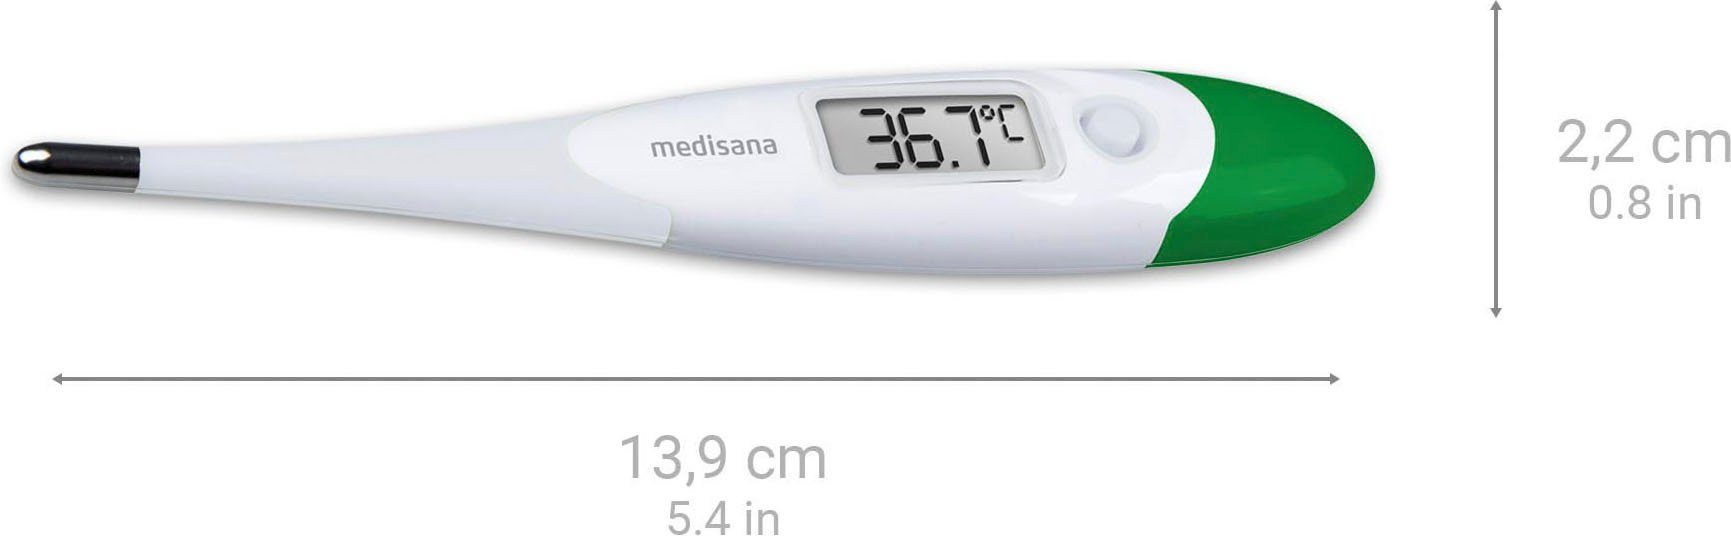 Medisana TM700 Fieberthermometer